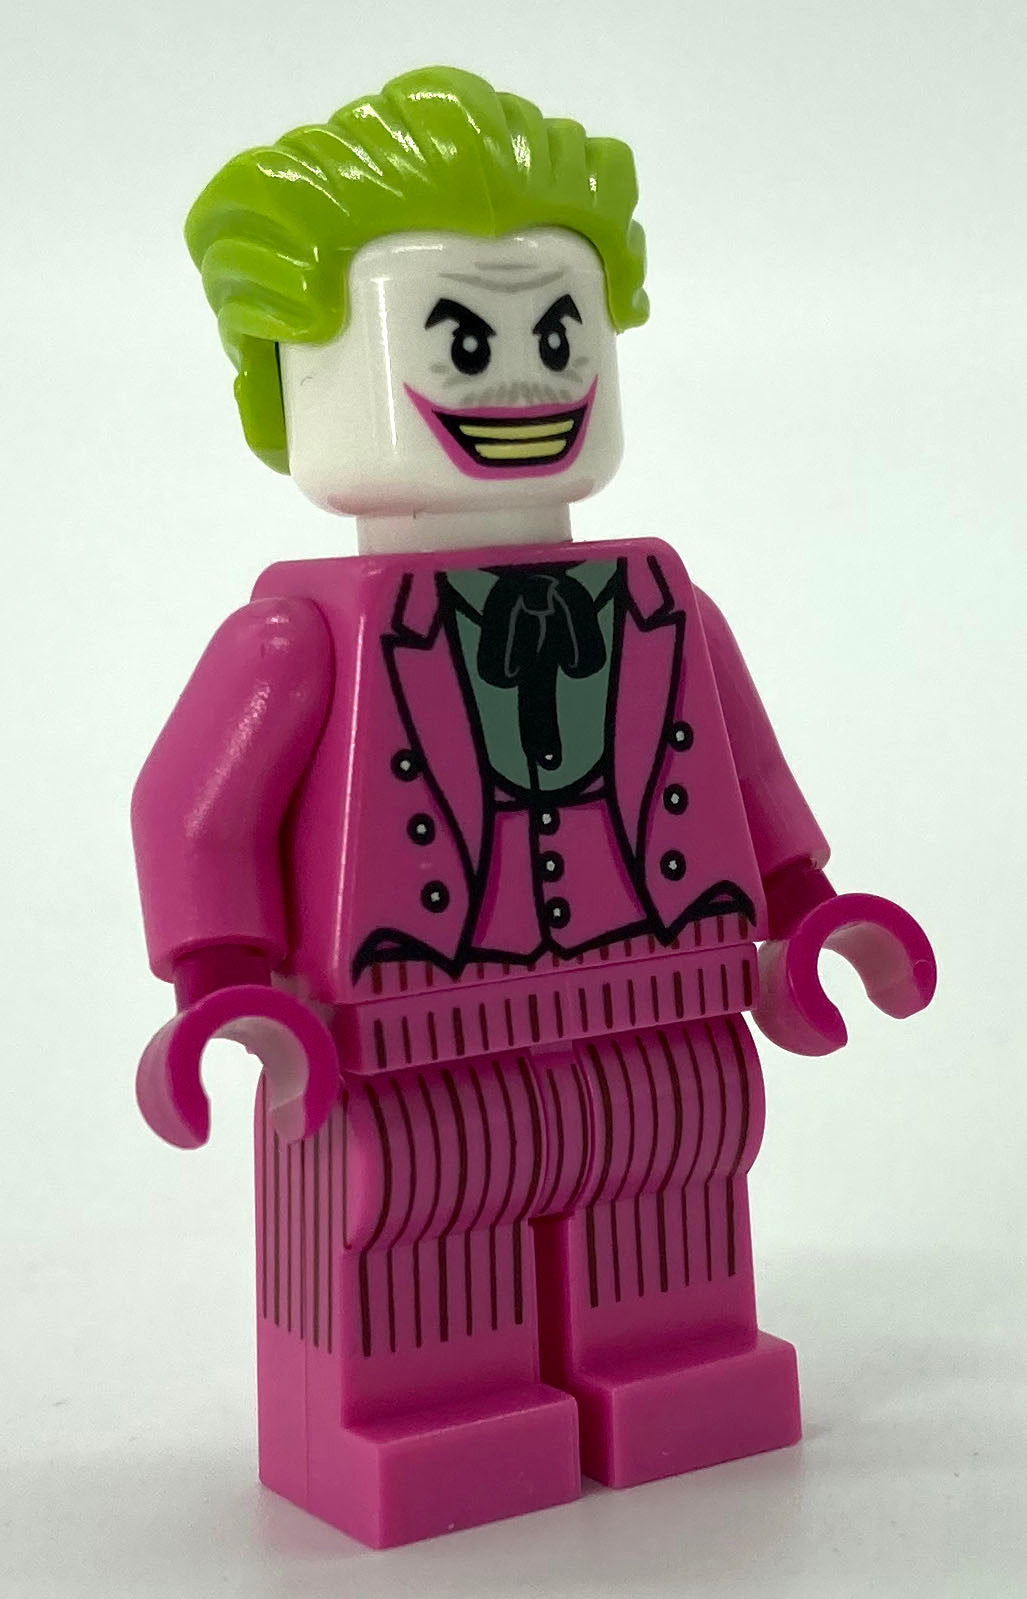 The Joker - Dark Pink Suit, Wide Grin/Lips Pursed